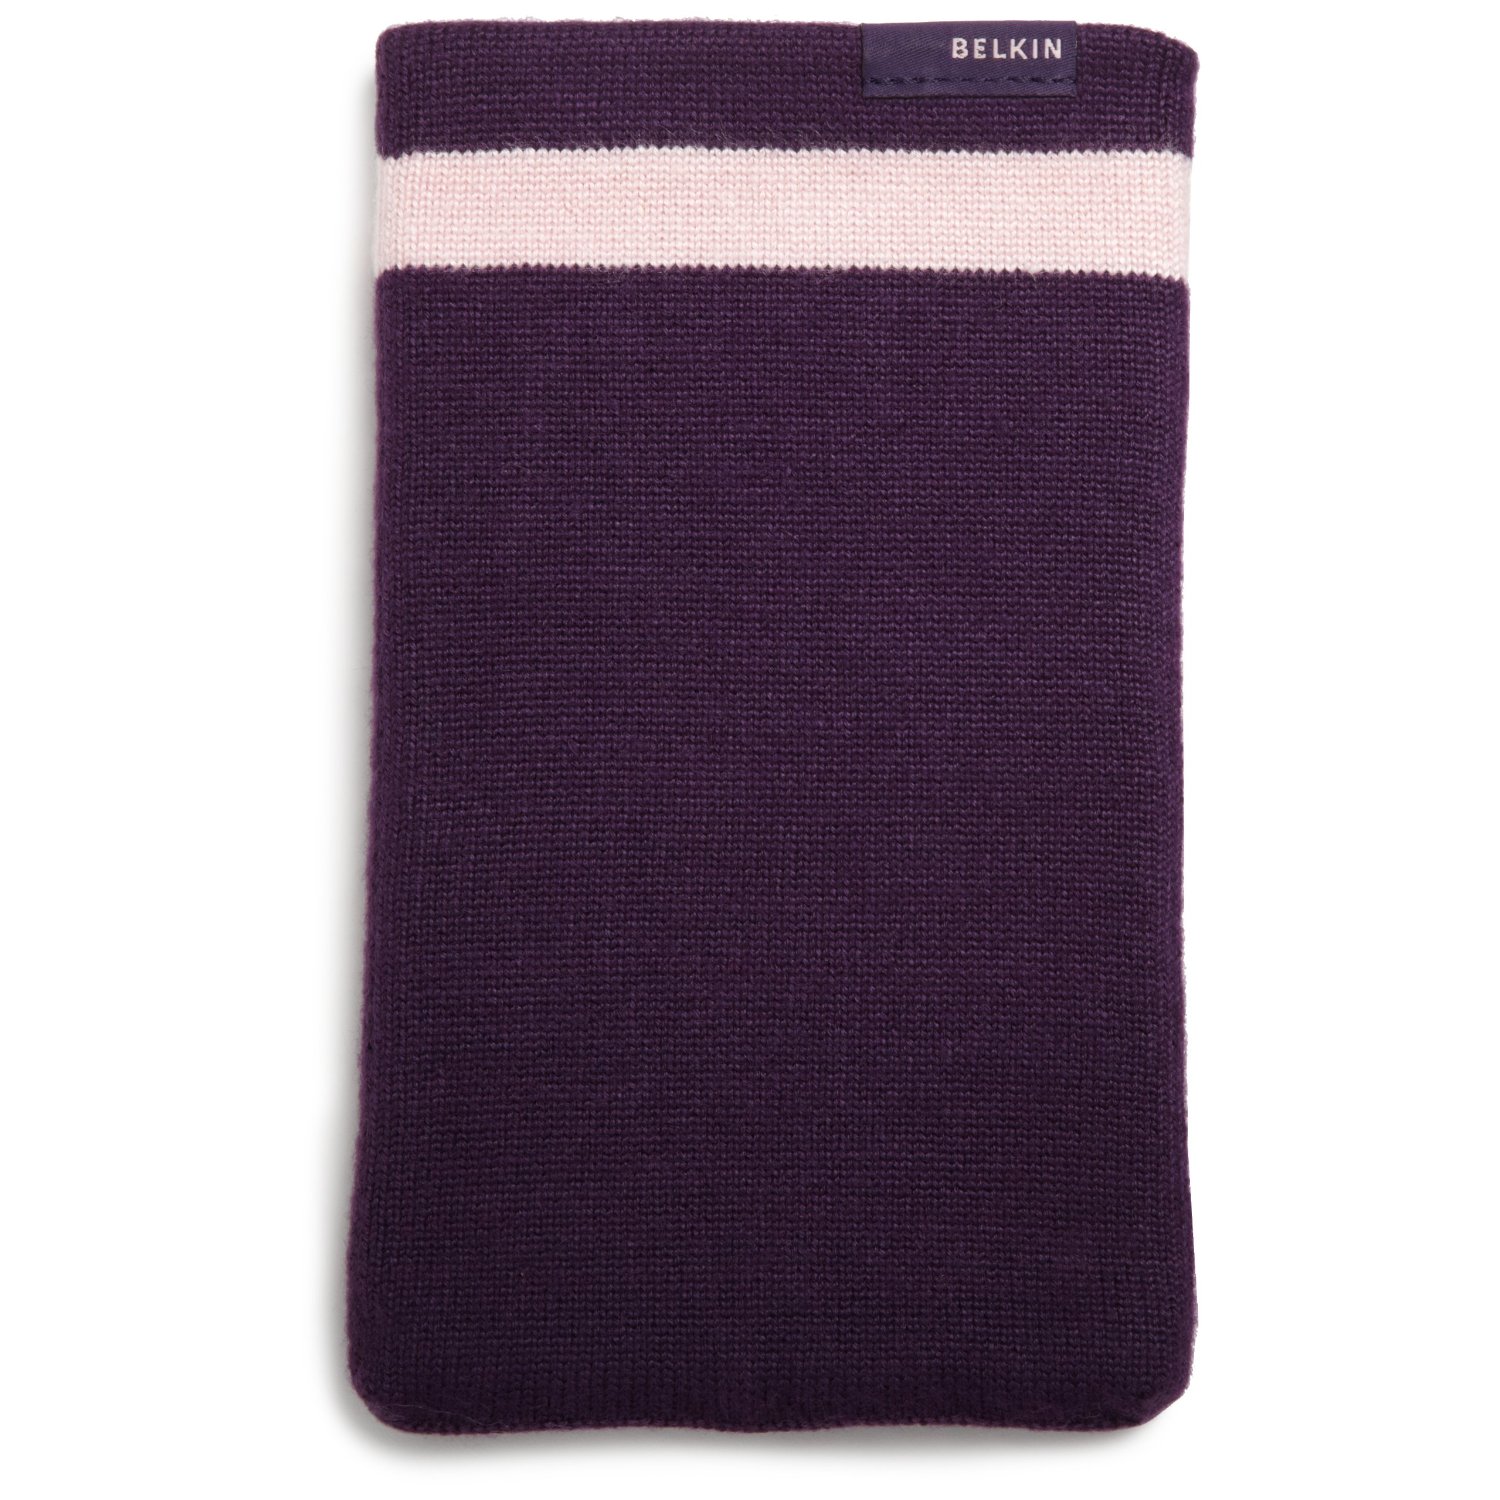 Husa Belkin Knit pentru Kindle Keyboard eBook Reader (violet)